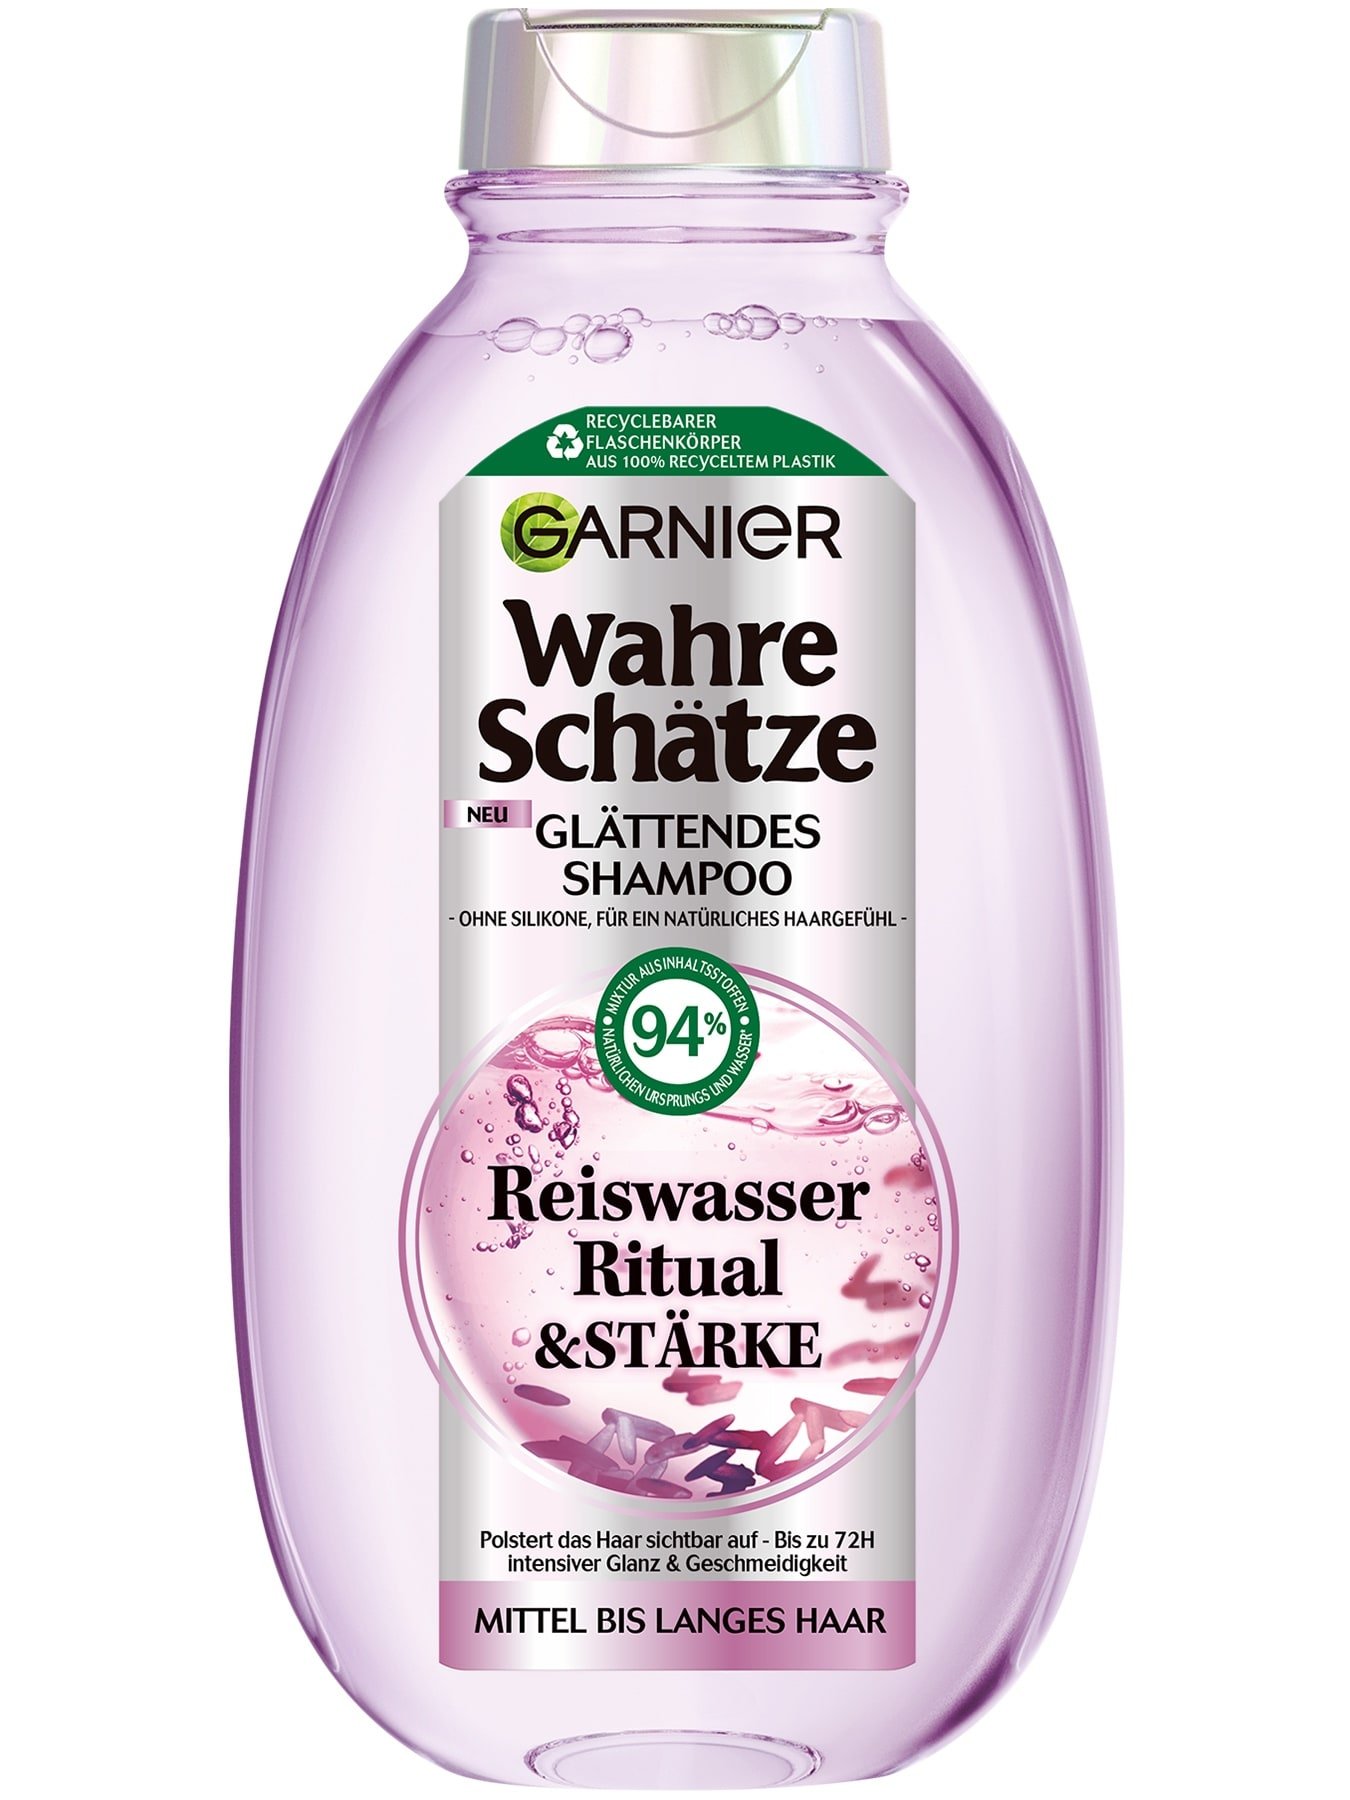 Garnier Wahre Schätze Reiswasser Ritual & Stärke, Glättendes Shampoo, 250 ml - Produktabbildung